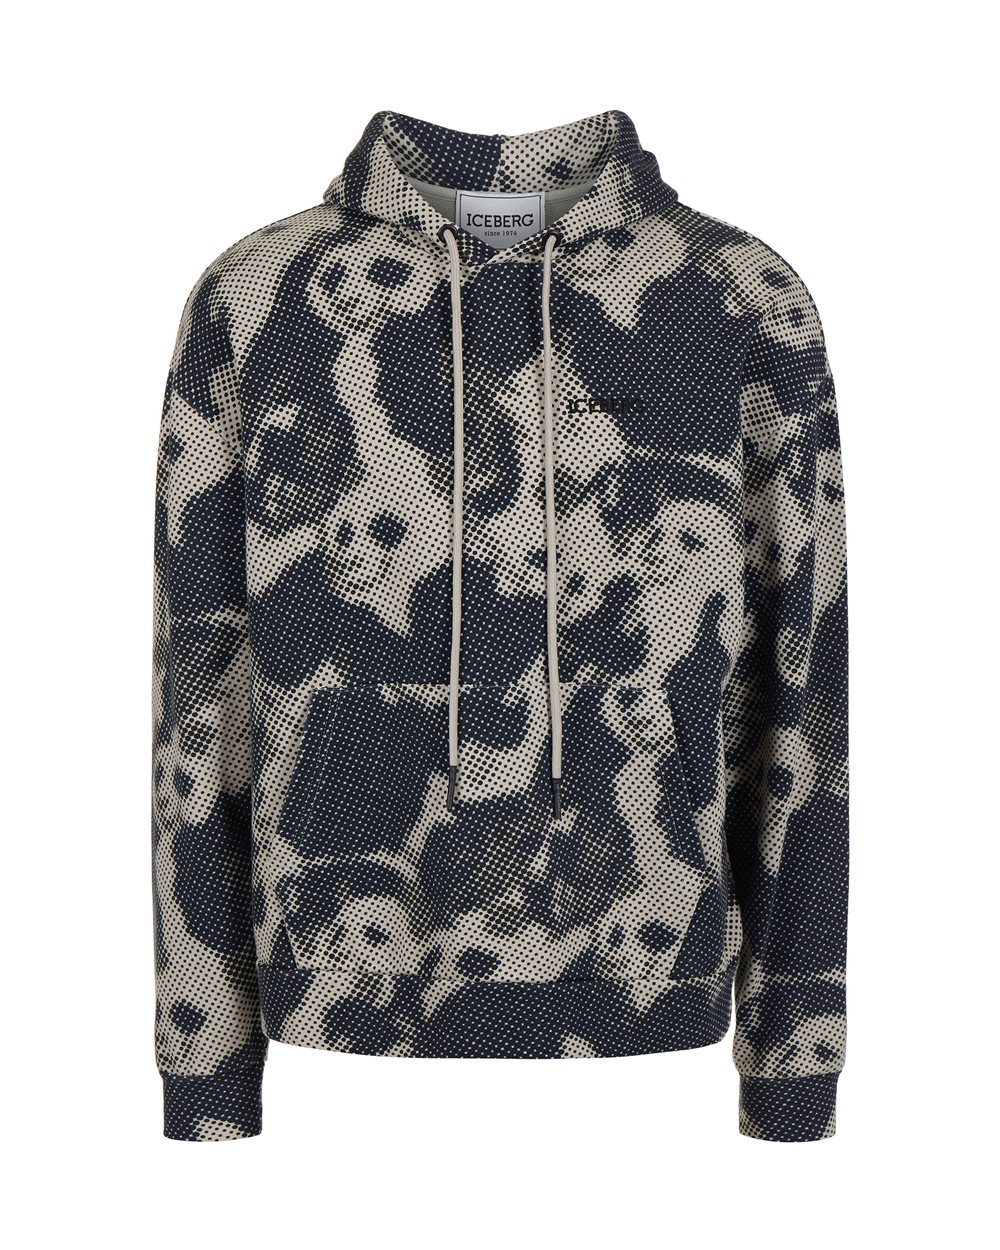 Sweatshirt with pixel print and logo - Sweatshirts | Iceberg - Official Website